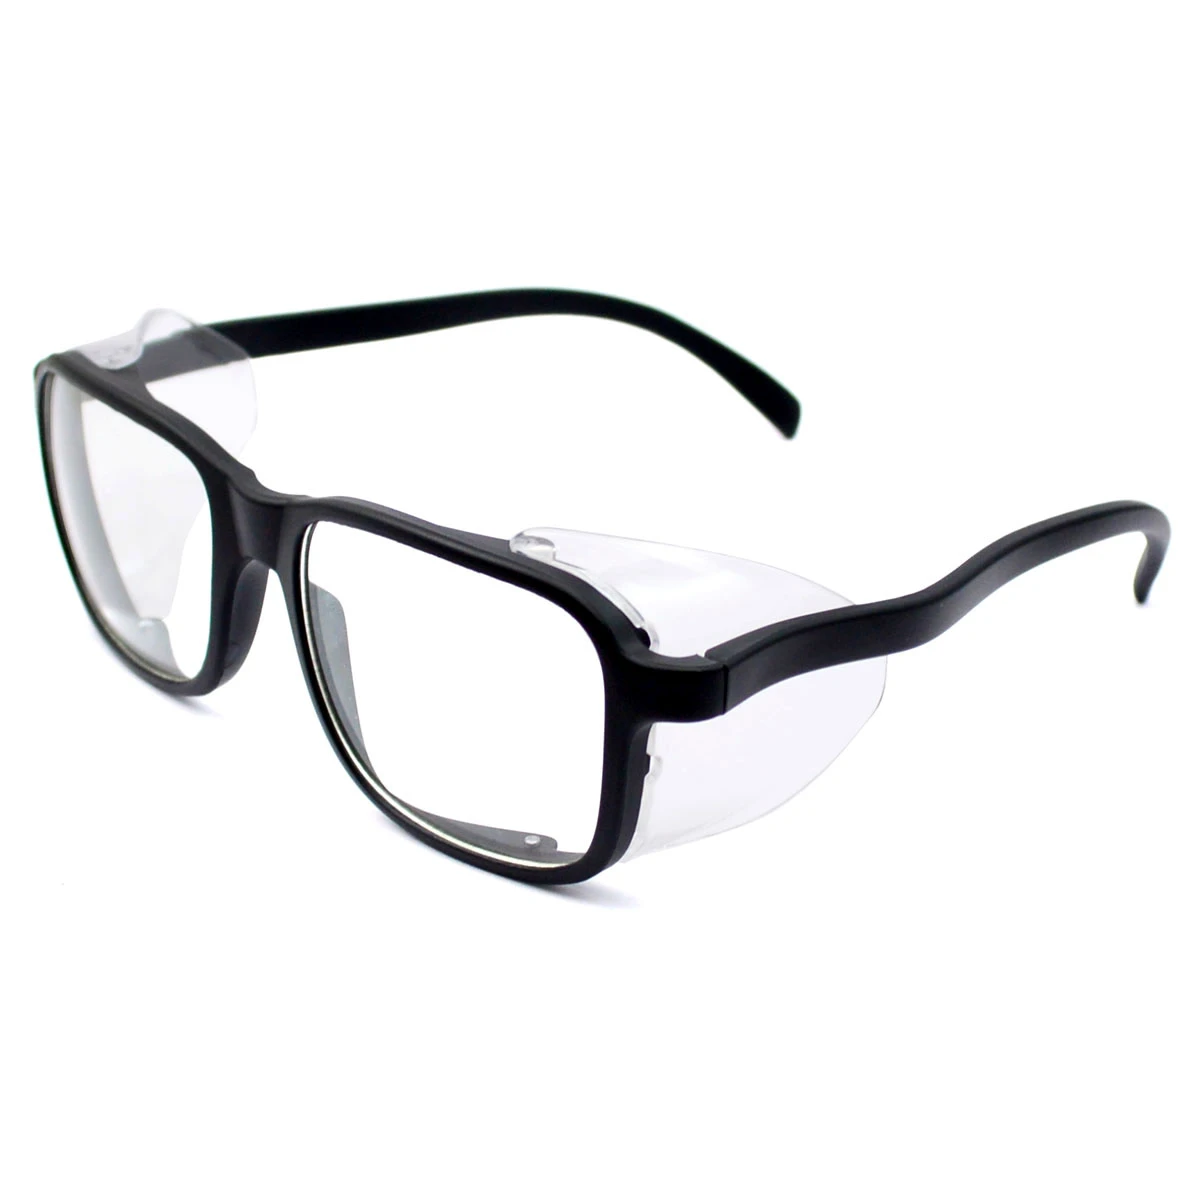 Ansi z87.1 fashion custom logo unbroken welding lens detachable side shields work security eye protection safety glasses EN166